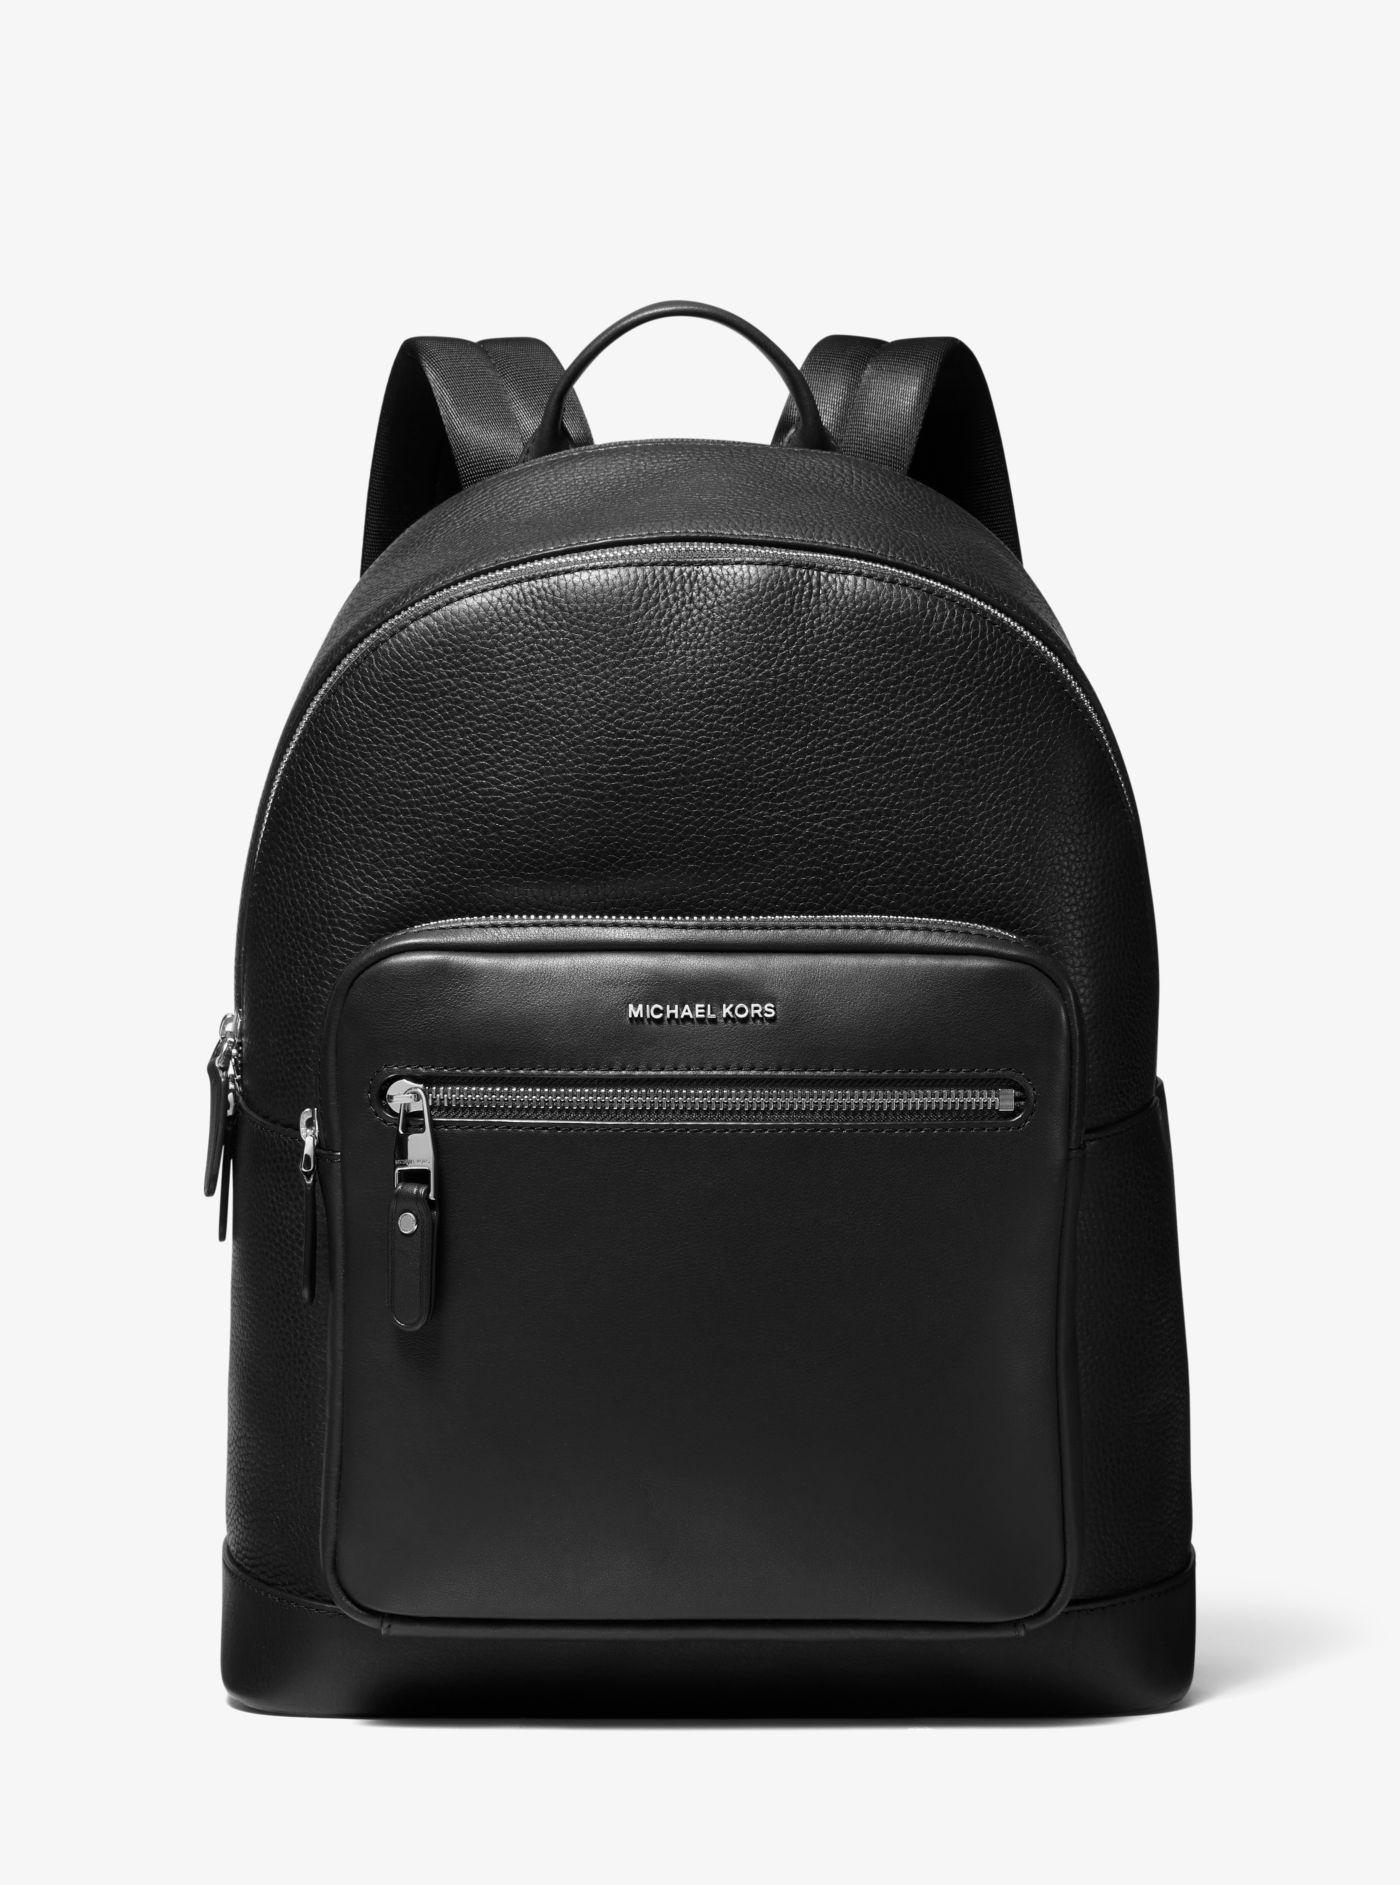 Michael Kors Hudson Pebbled Leather Backpack in Black for Men - Lyst